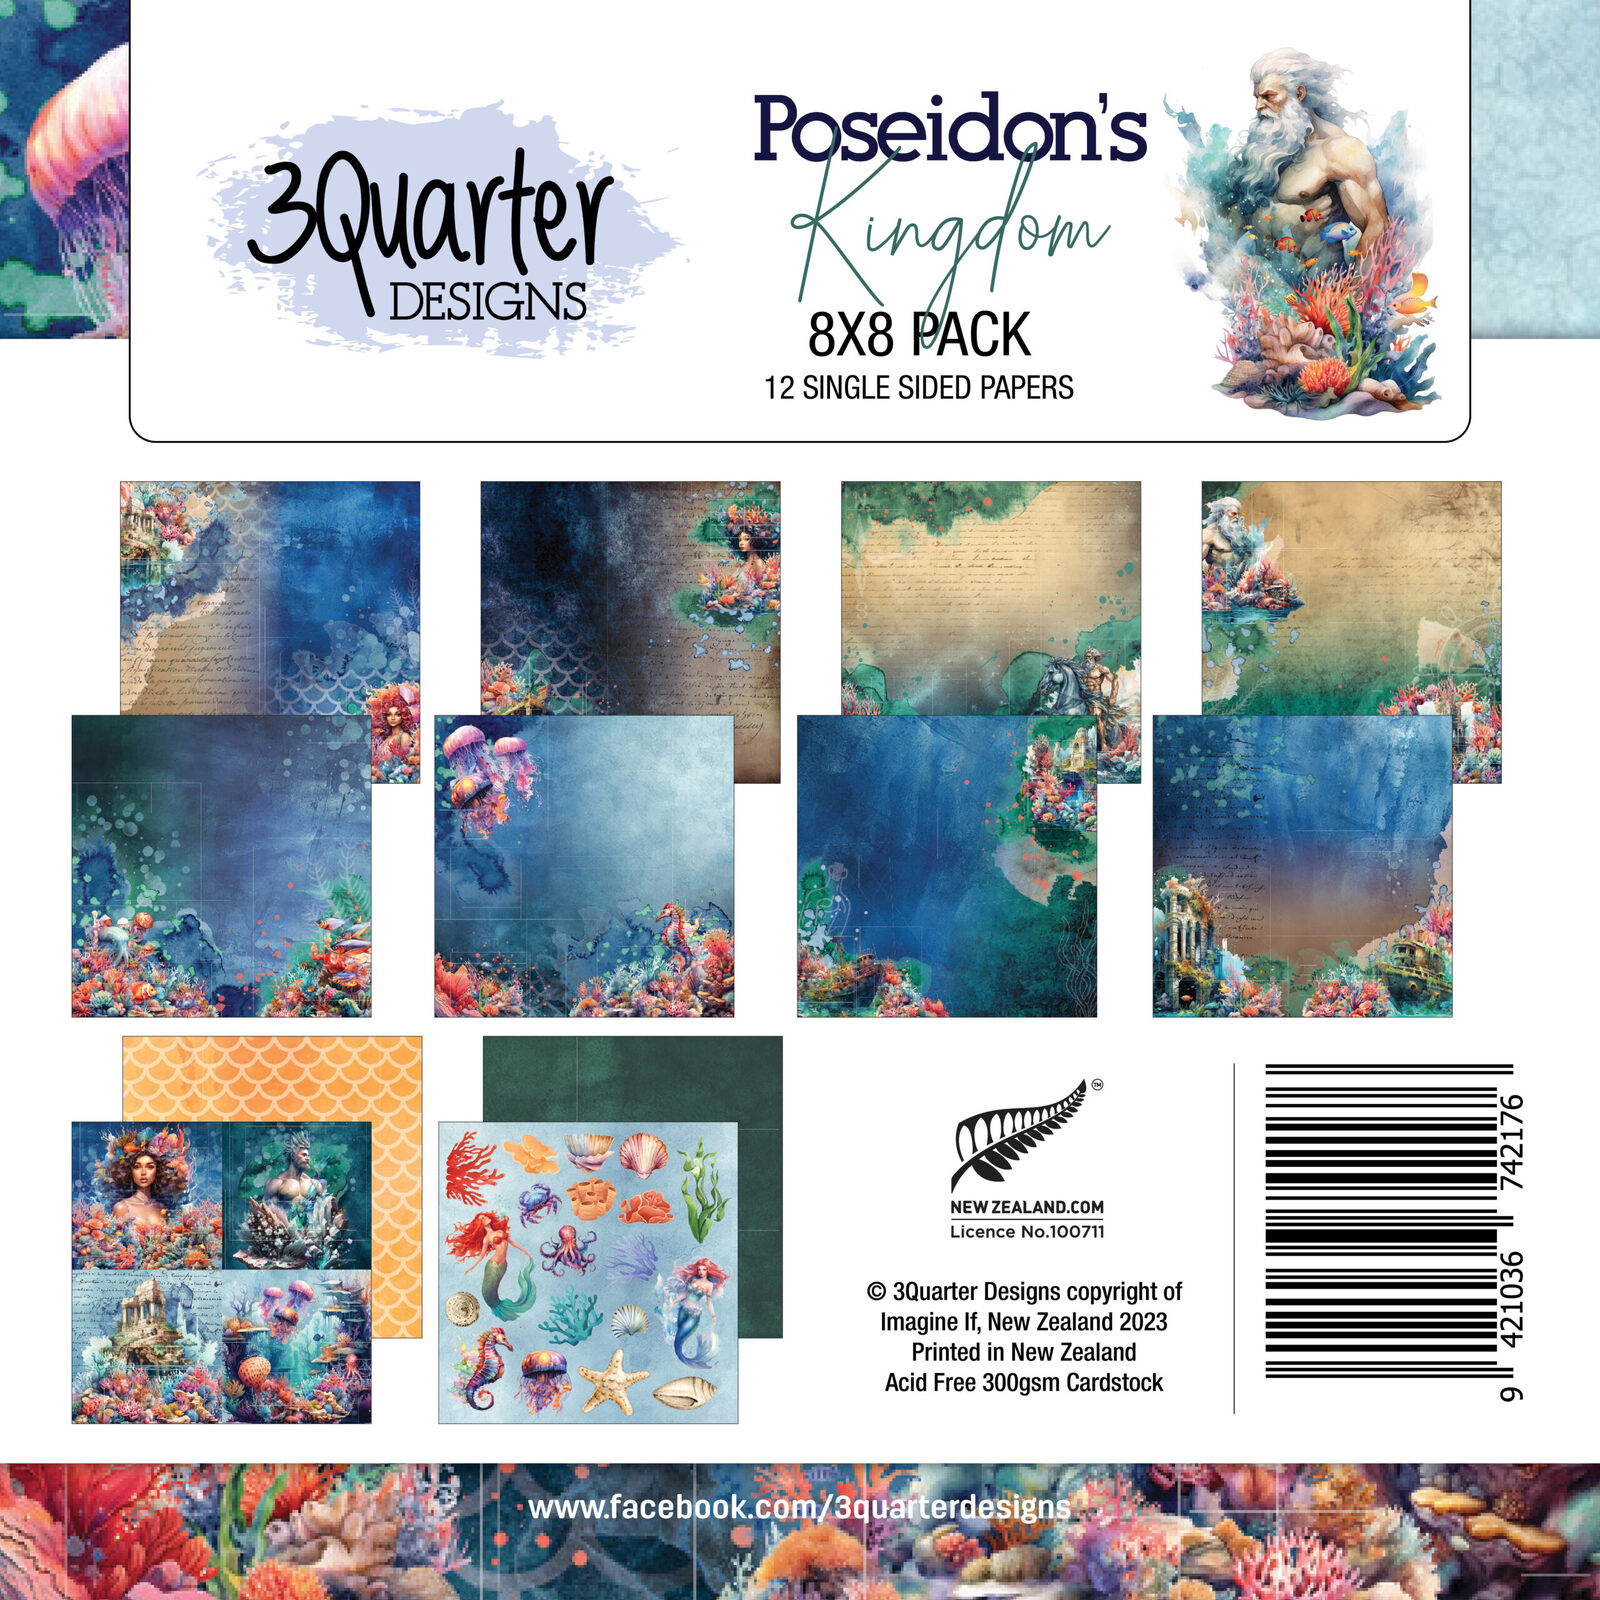 3Quarter Designs - Poseidon’s Kingdom - 8x8 Pack